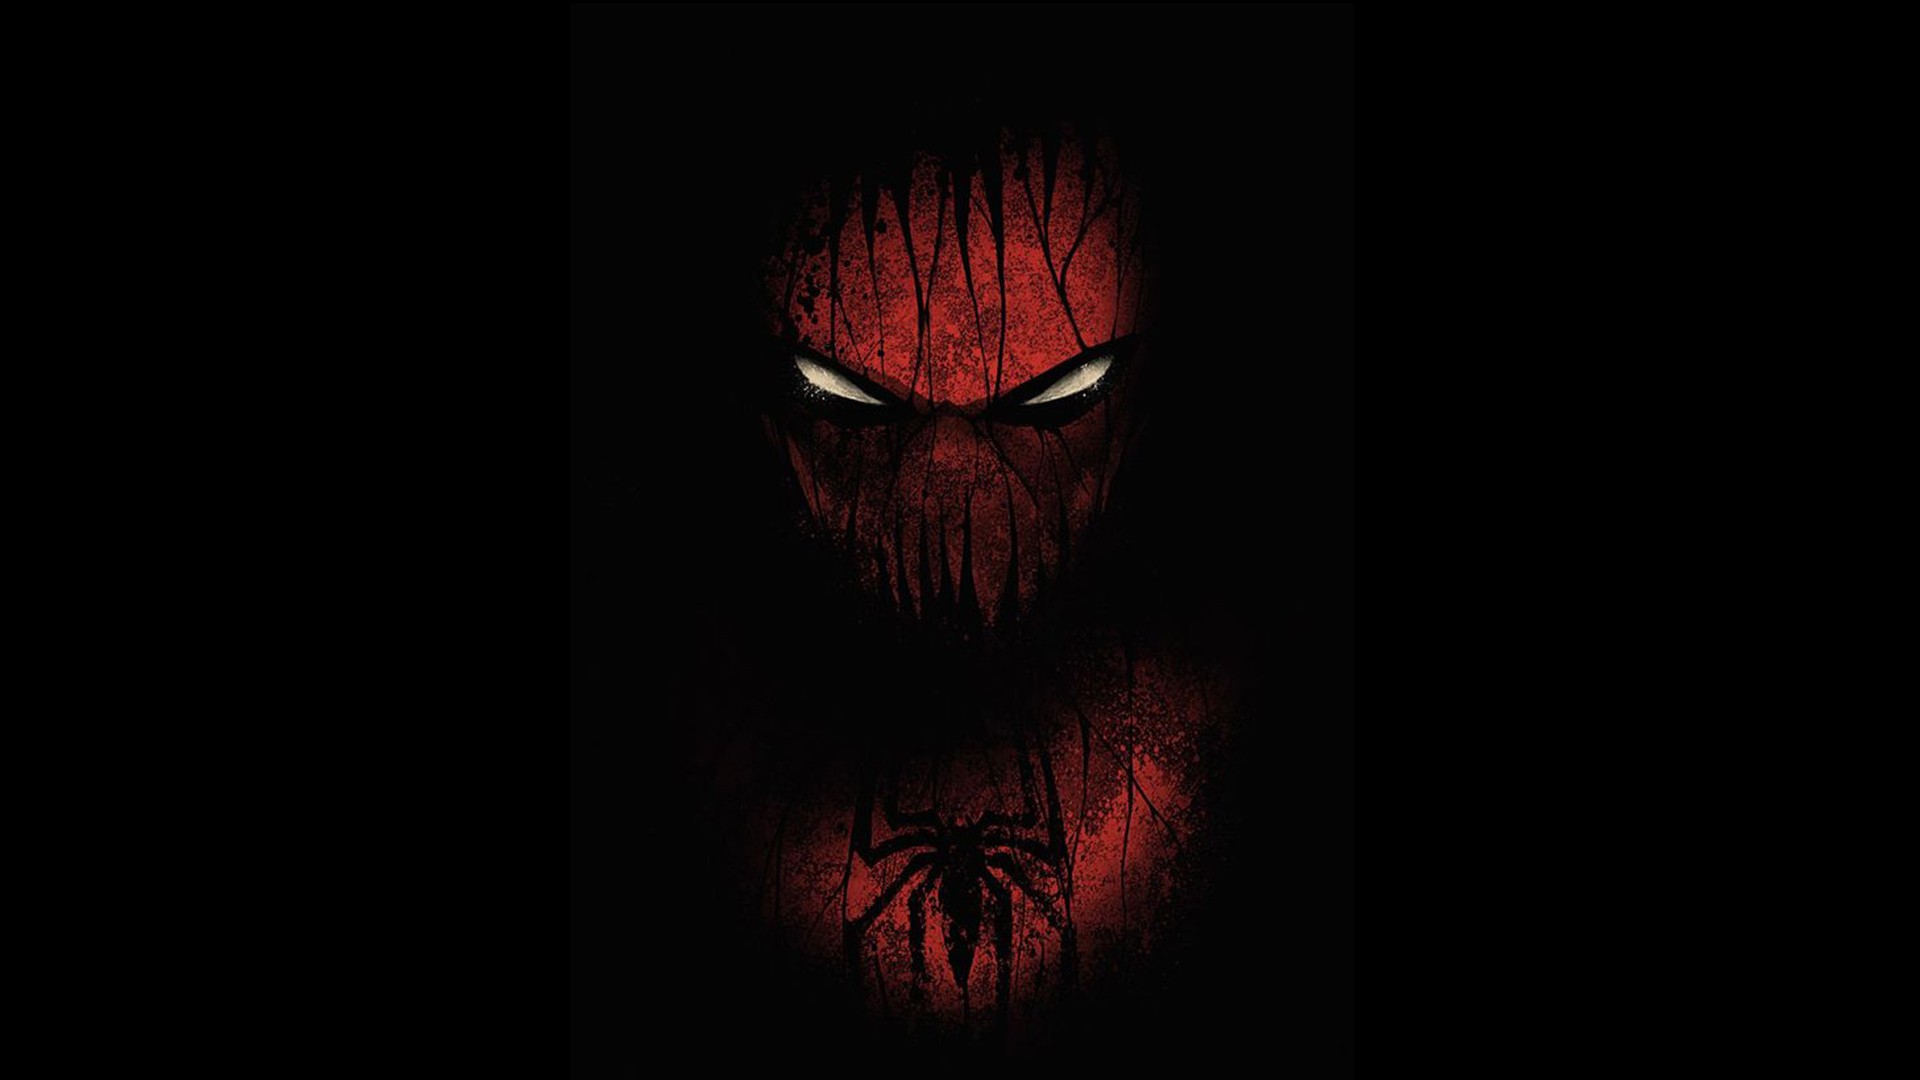 General 1920x1080 red Spider-Man Marvel Comics black background artwork minimalism dark